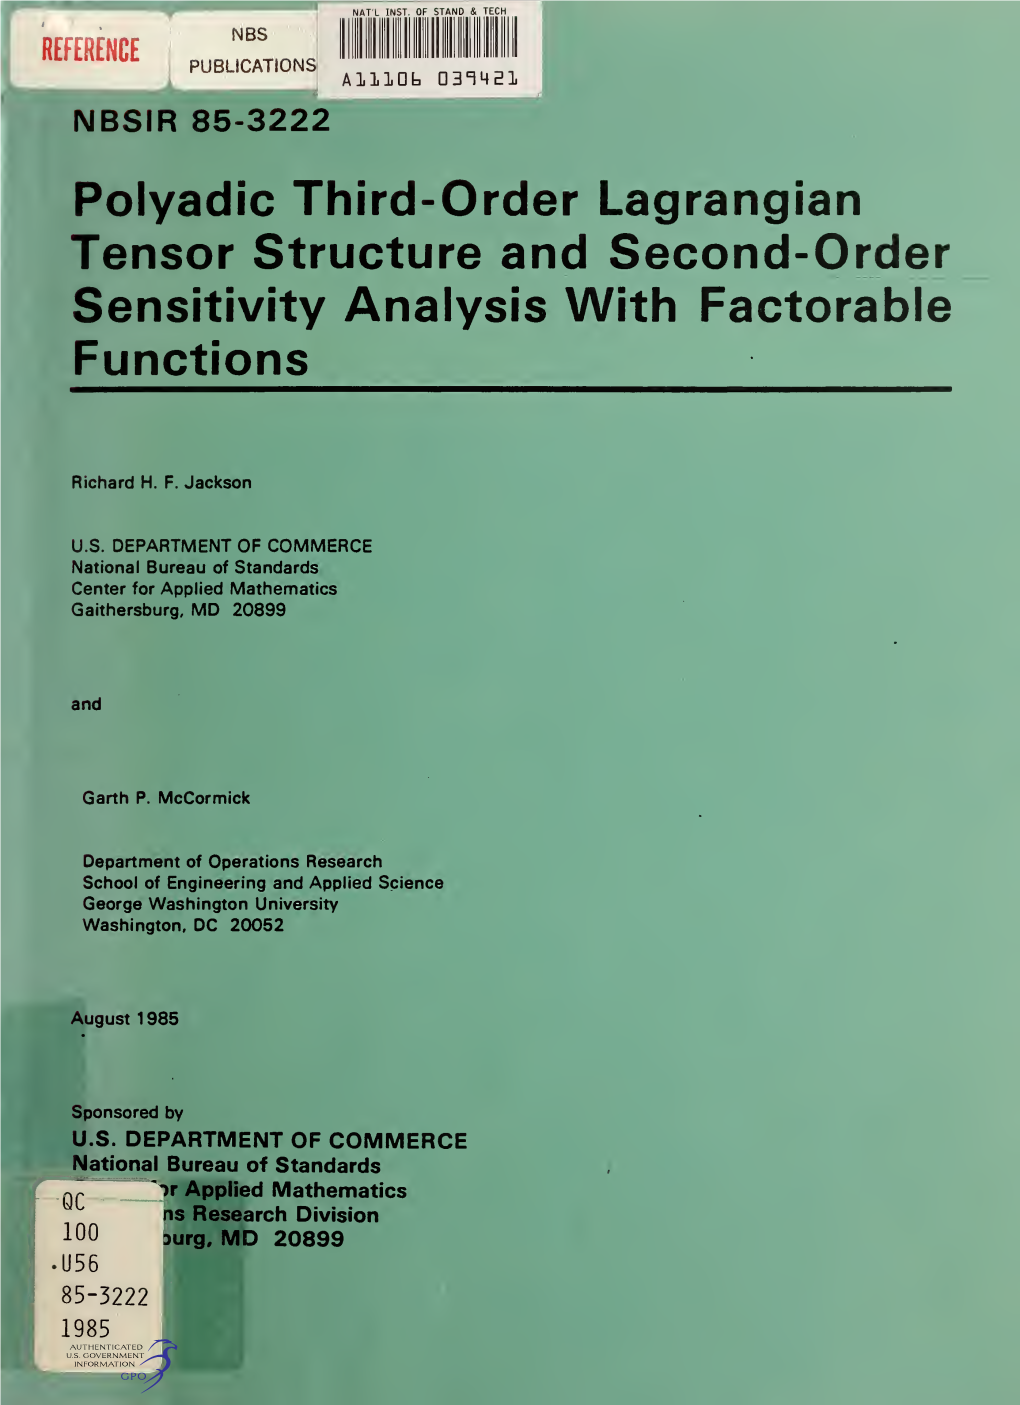 Polyadic Third-Order Legrangian Tensor Structure And